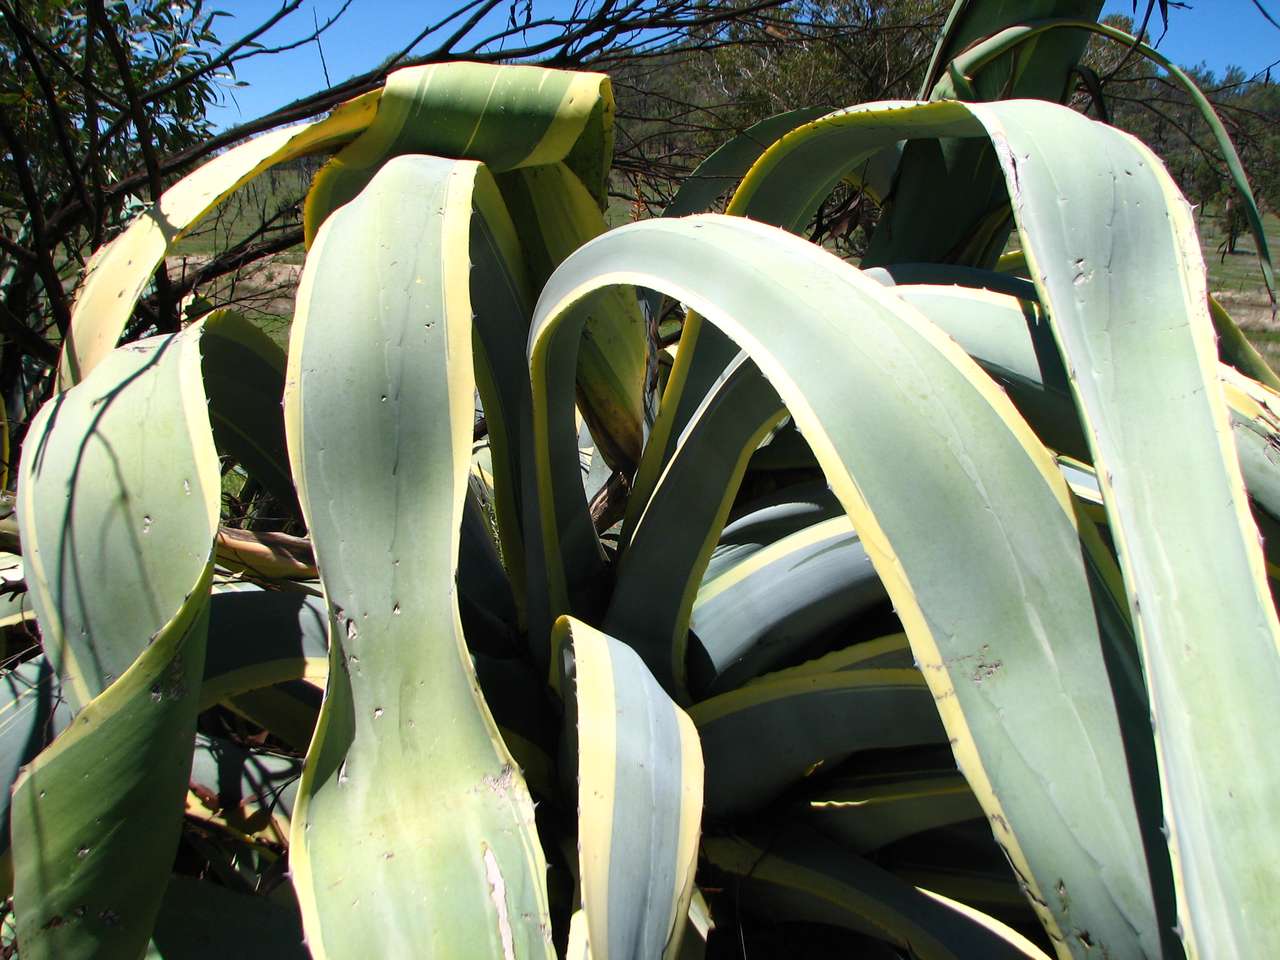 Agave plant ePuzzle photo puzzle